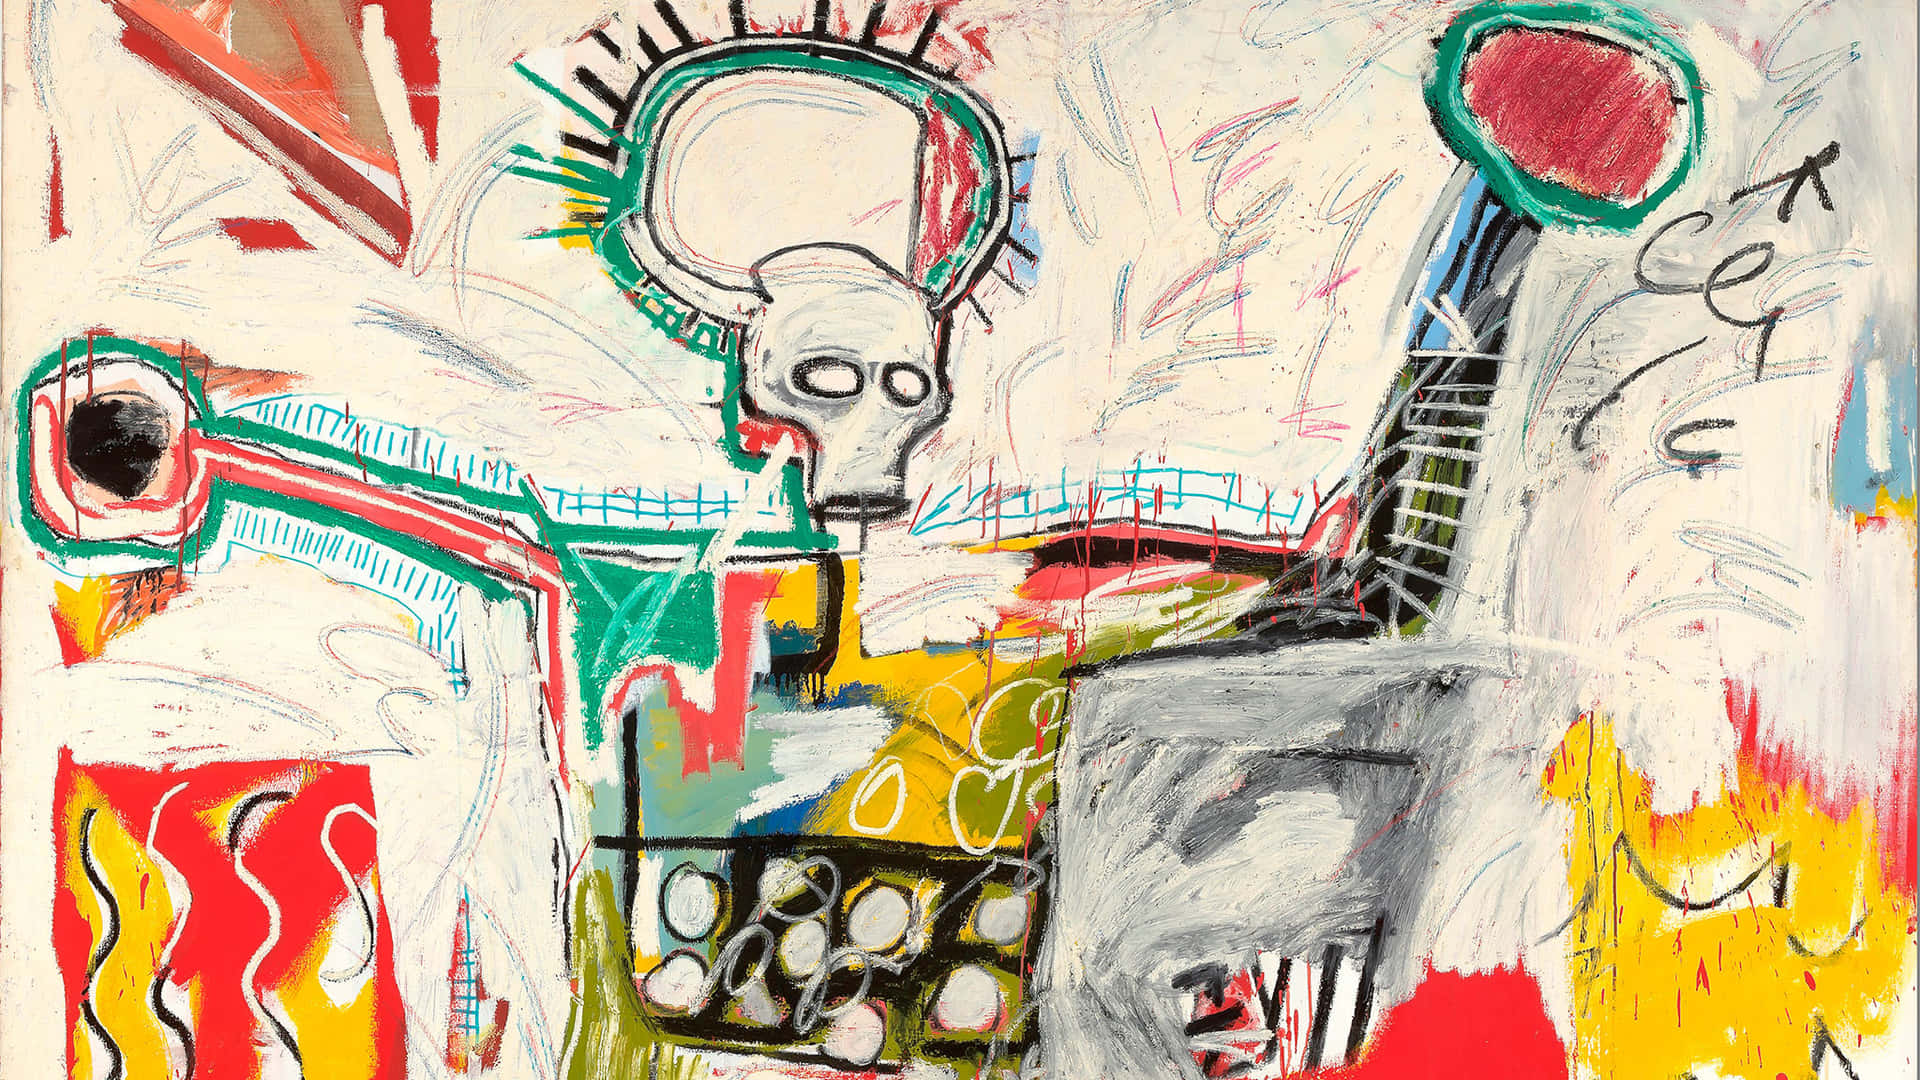 A Digital Recreation of the Iconic Portrait of Jean-Michel Basquiat Wallpaper